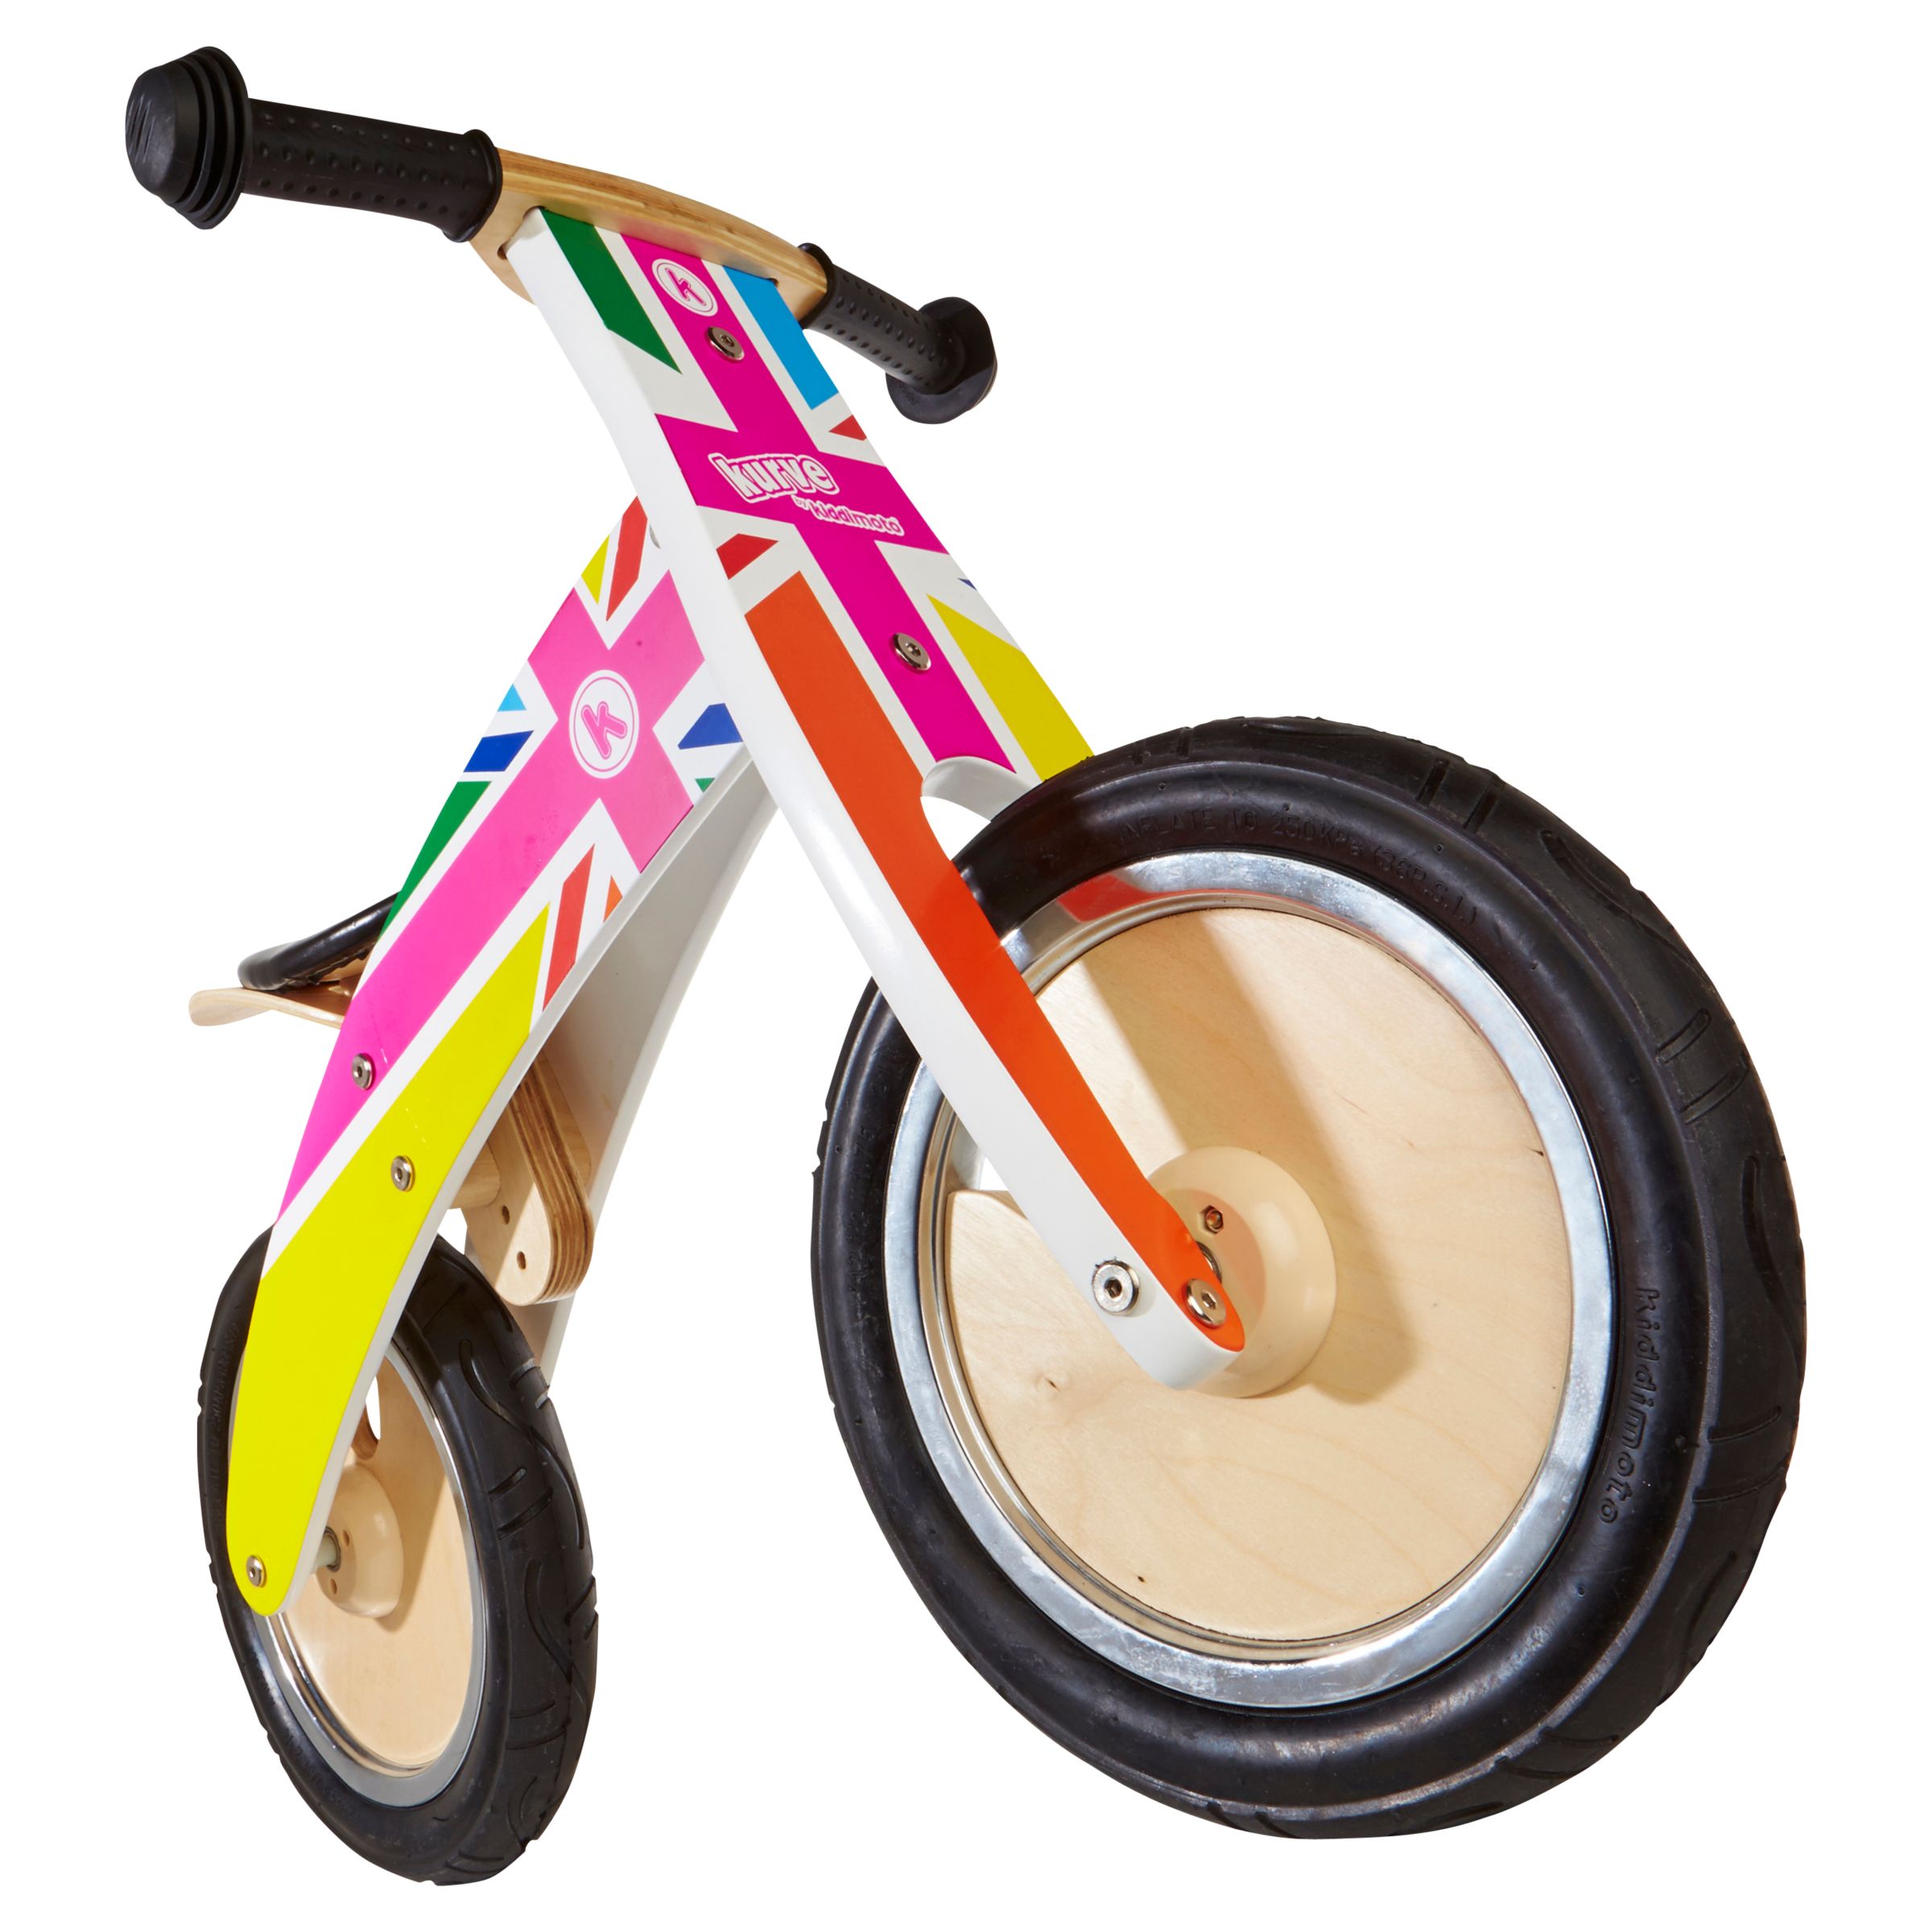 kiddimoto balance bike pink